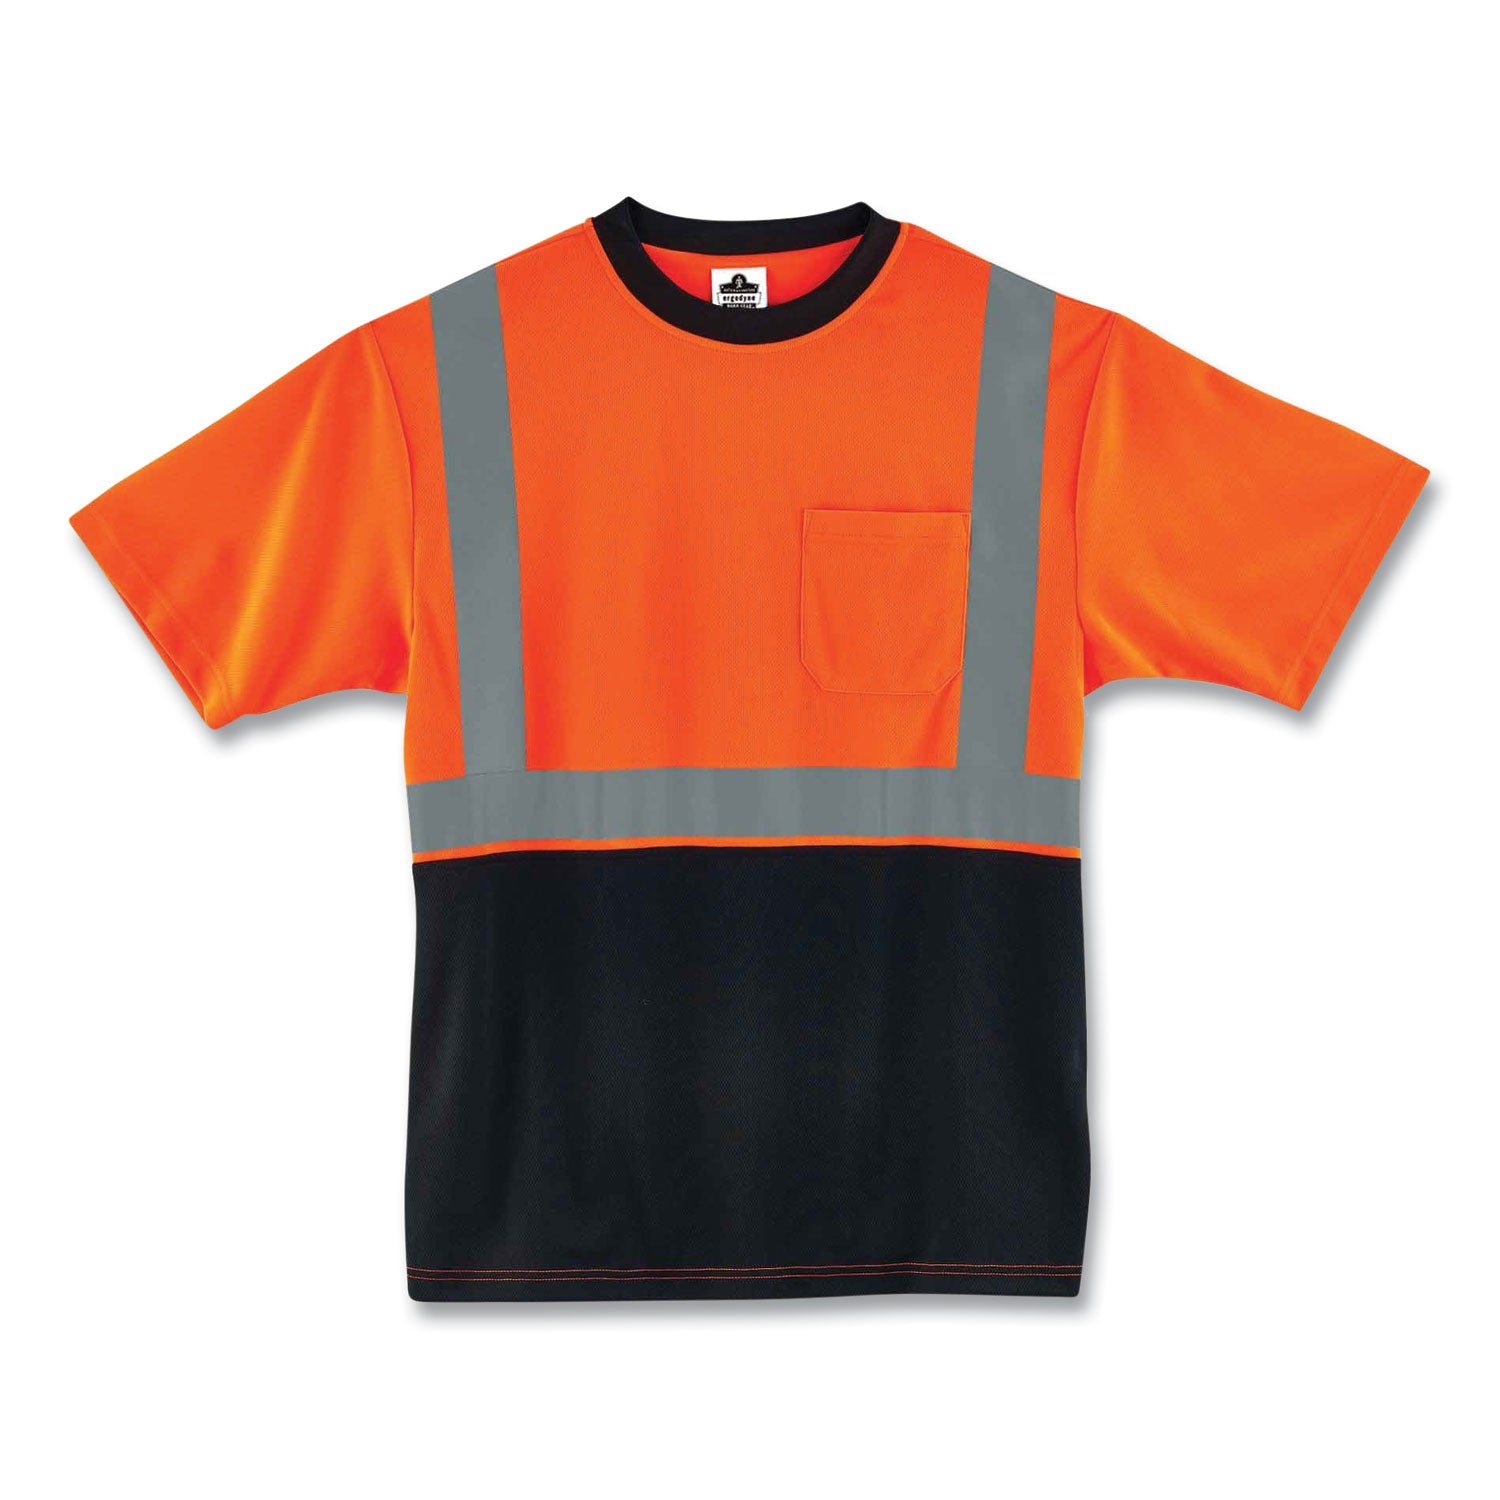 glowear-8289bk-class-2-hi-vis-t-shirt-with-black-bottom-2x-large-orange-ships-in-1-3-business-days_ego22516 - 1